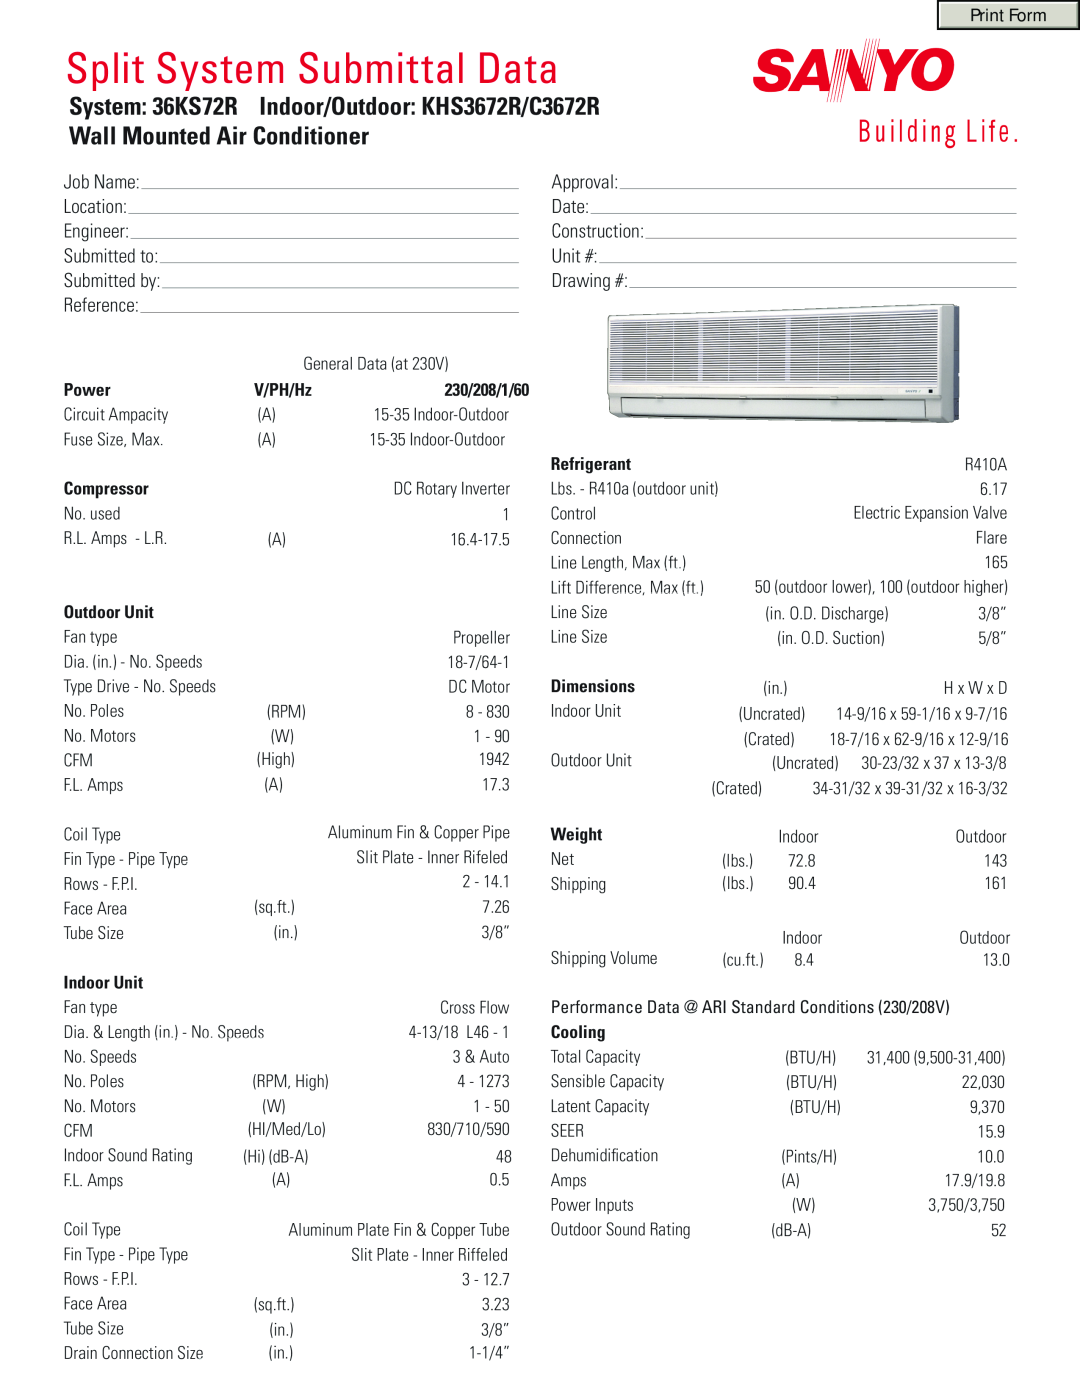 Sanyo KHS3672R dimensions Power, 230/208/1/60, Compressor, Outdoor Unit, Indoor Unit, Refrigerant, Dimensions, Weight 